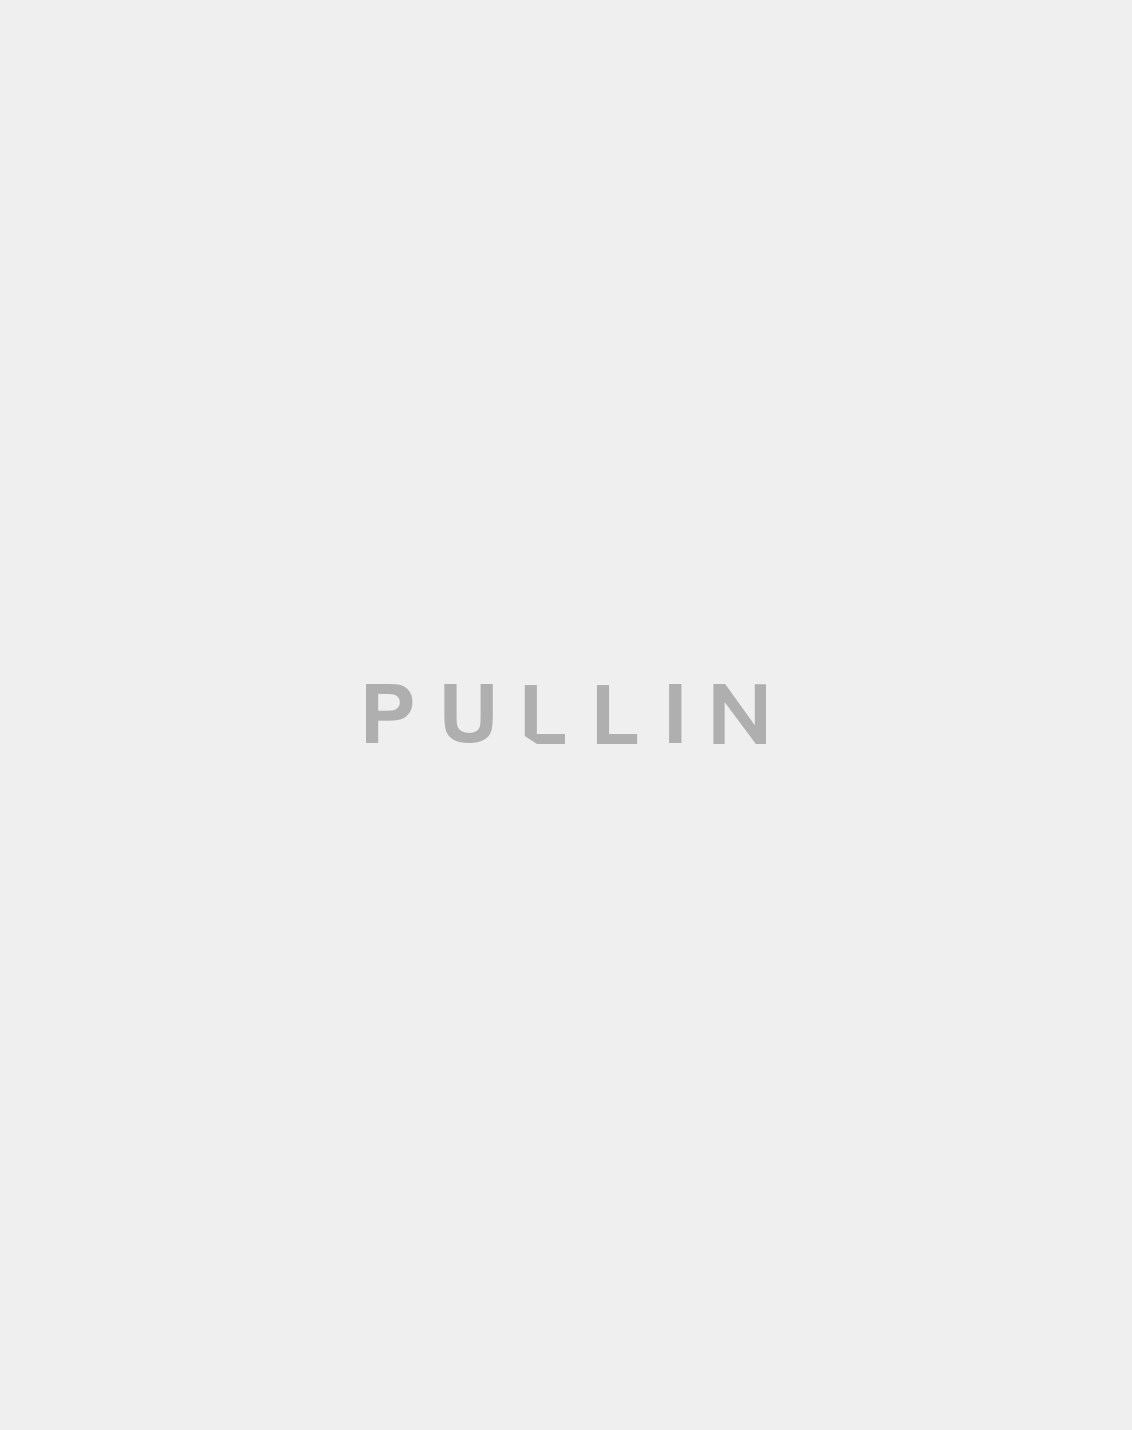 PULLIN